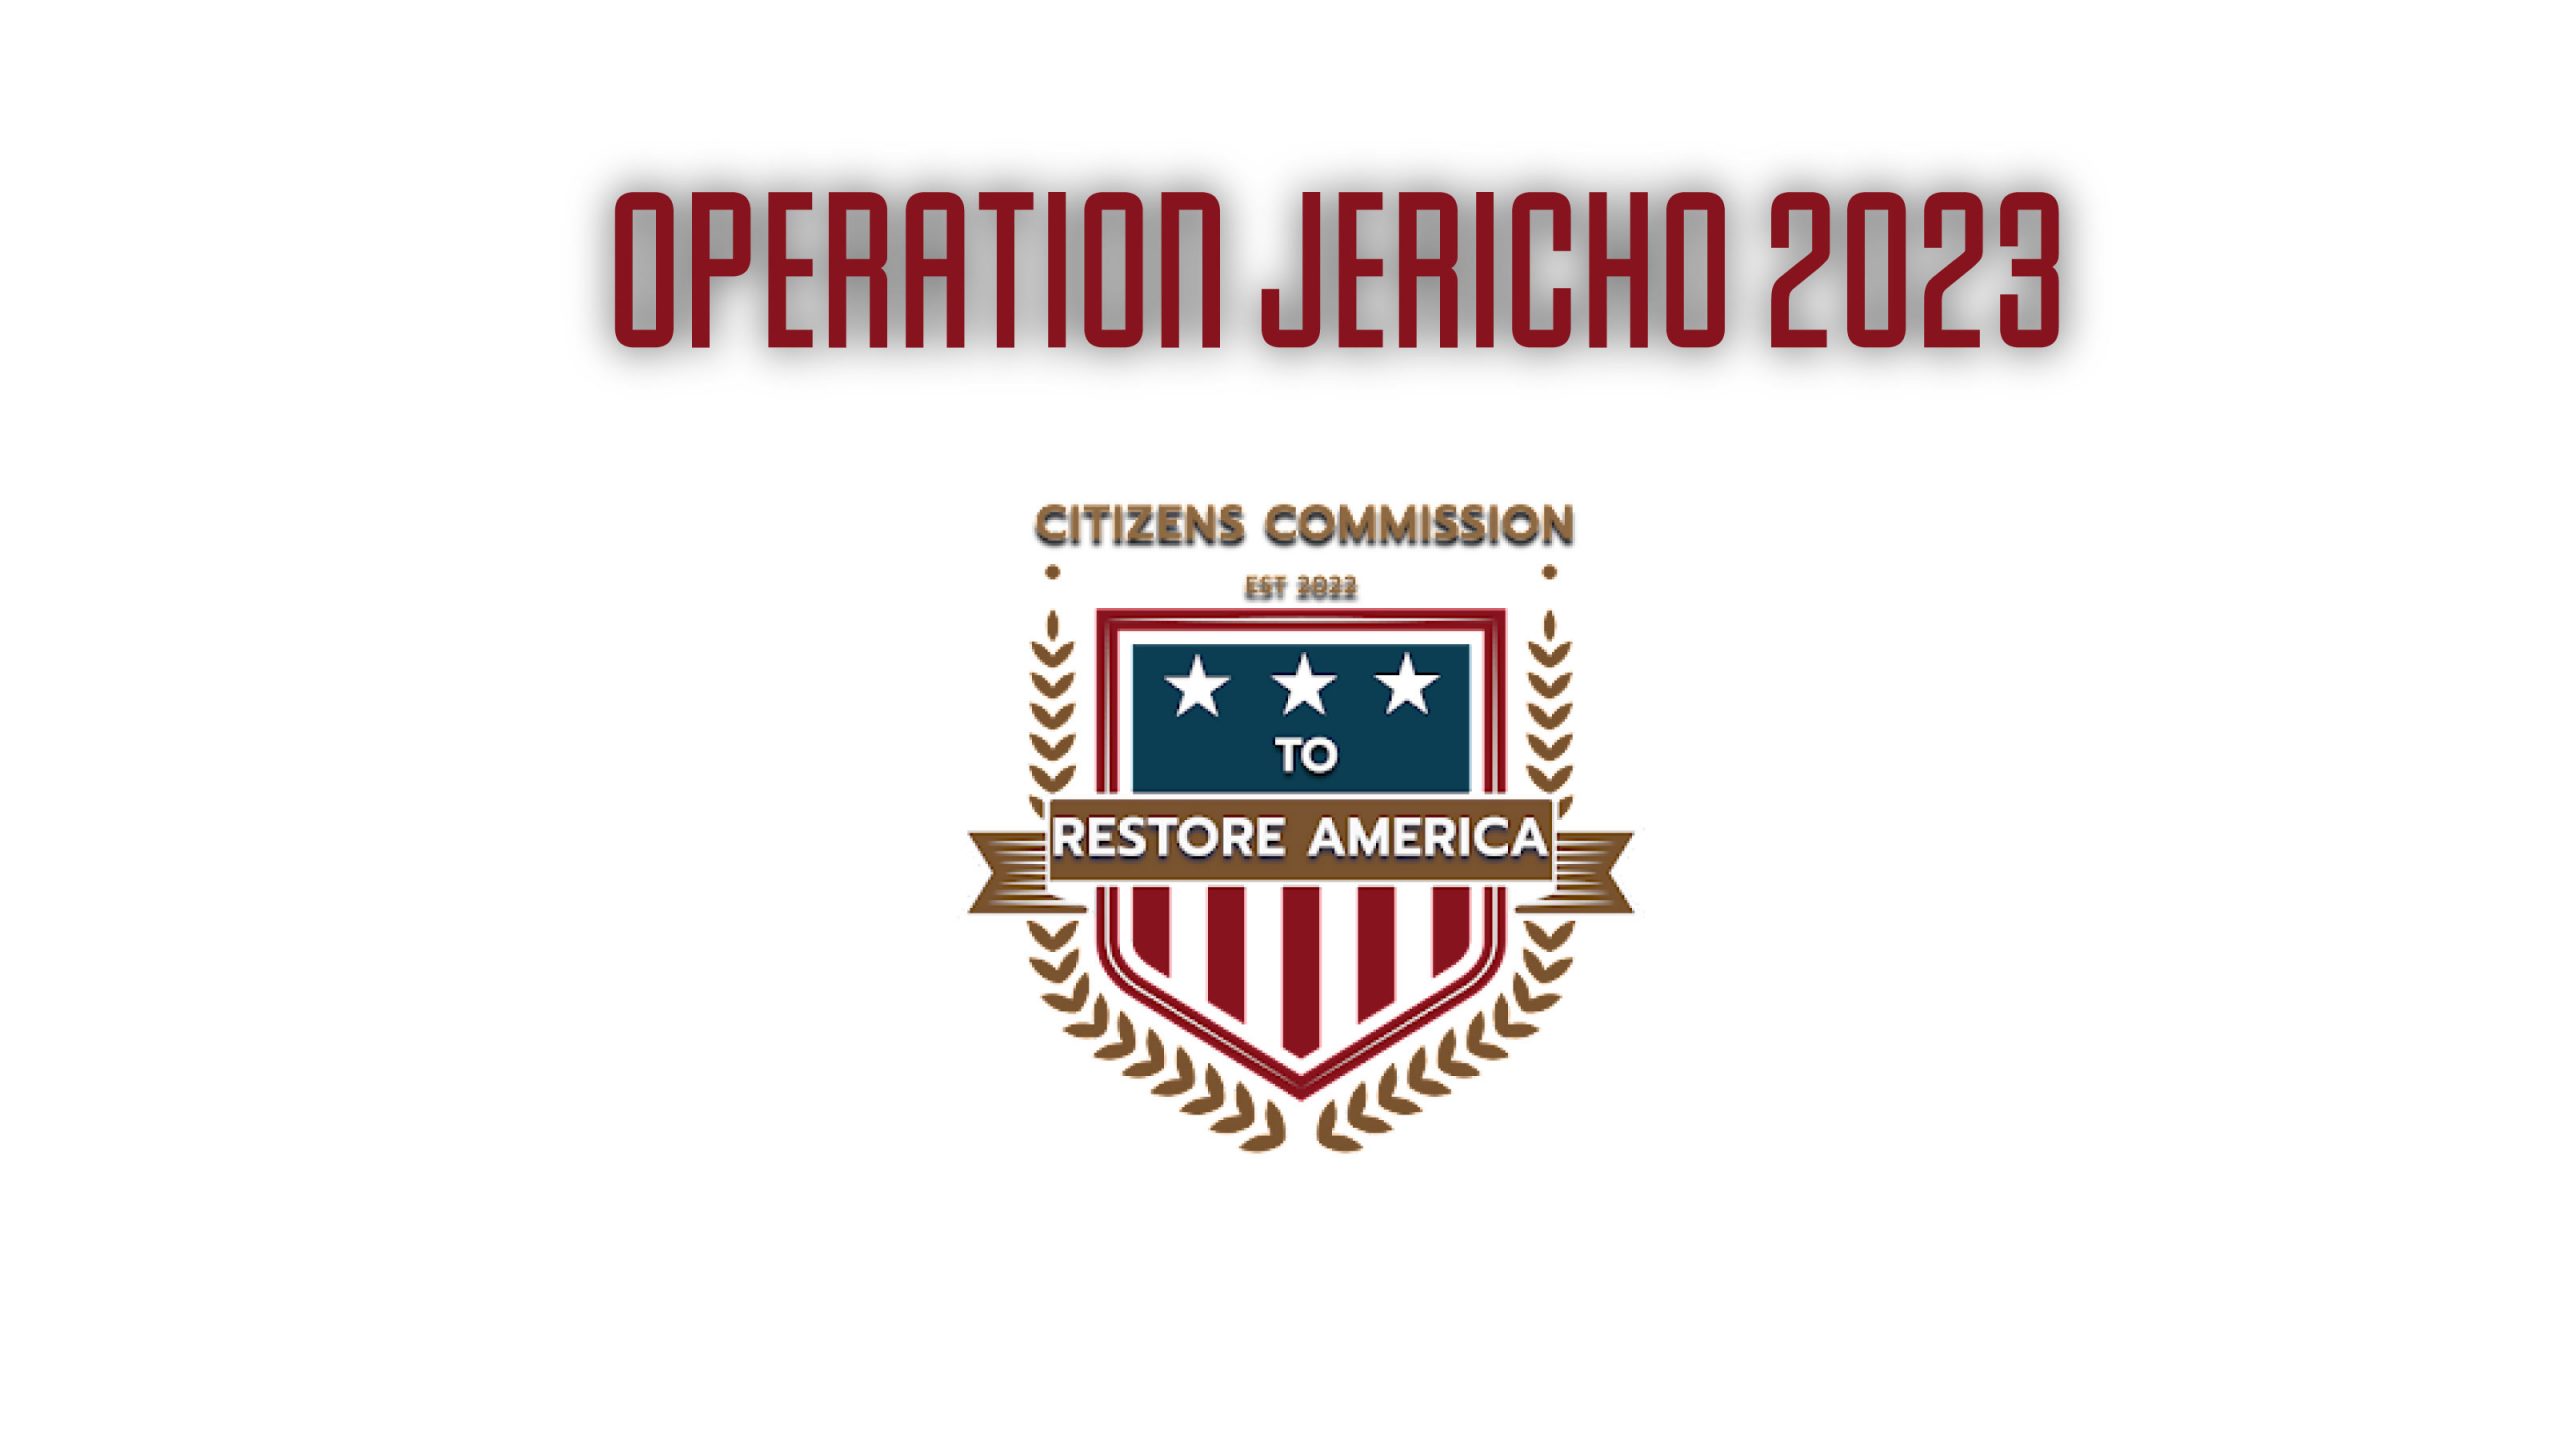 Operatoin Jericho